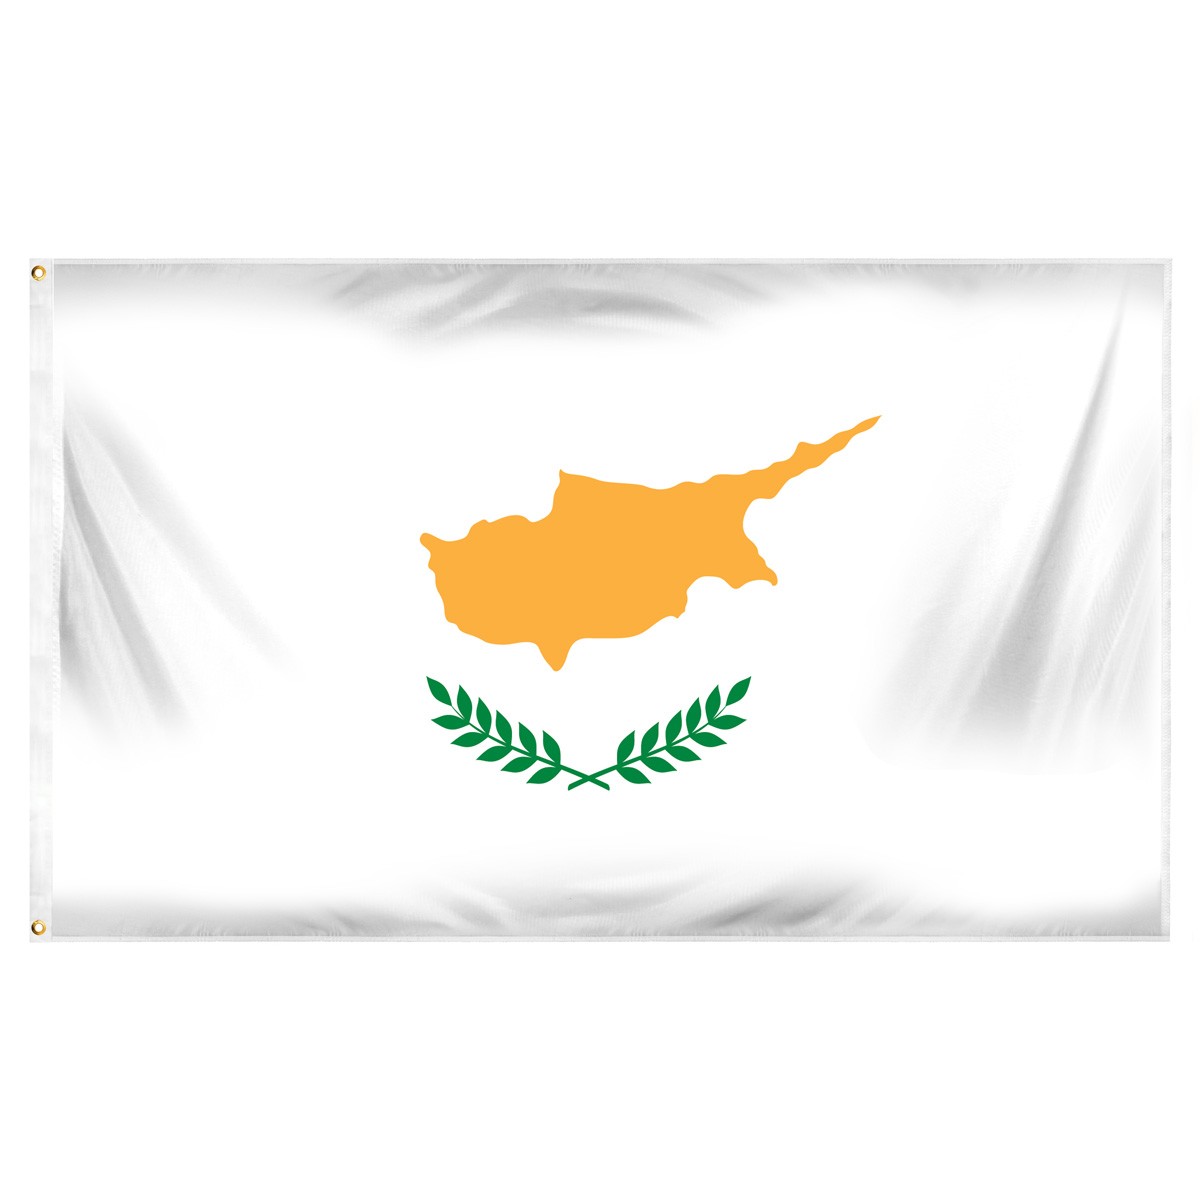 Republic of Cyprus Beach Flag and Sailing Flag